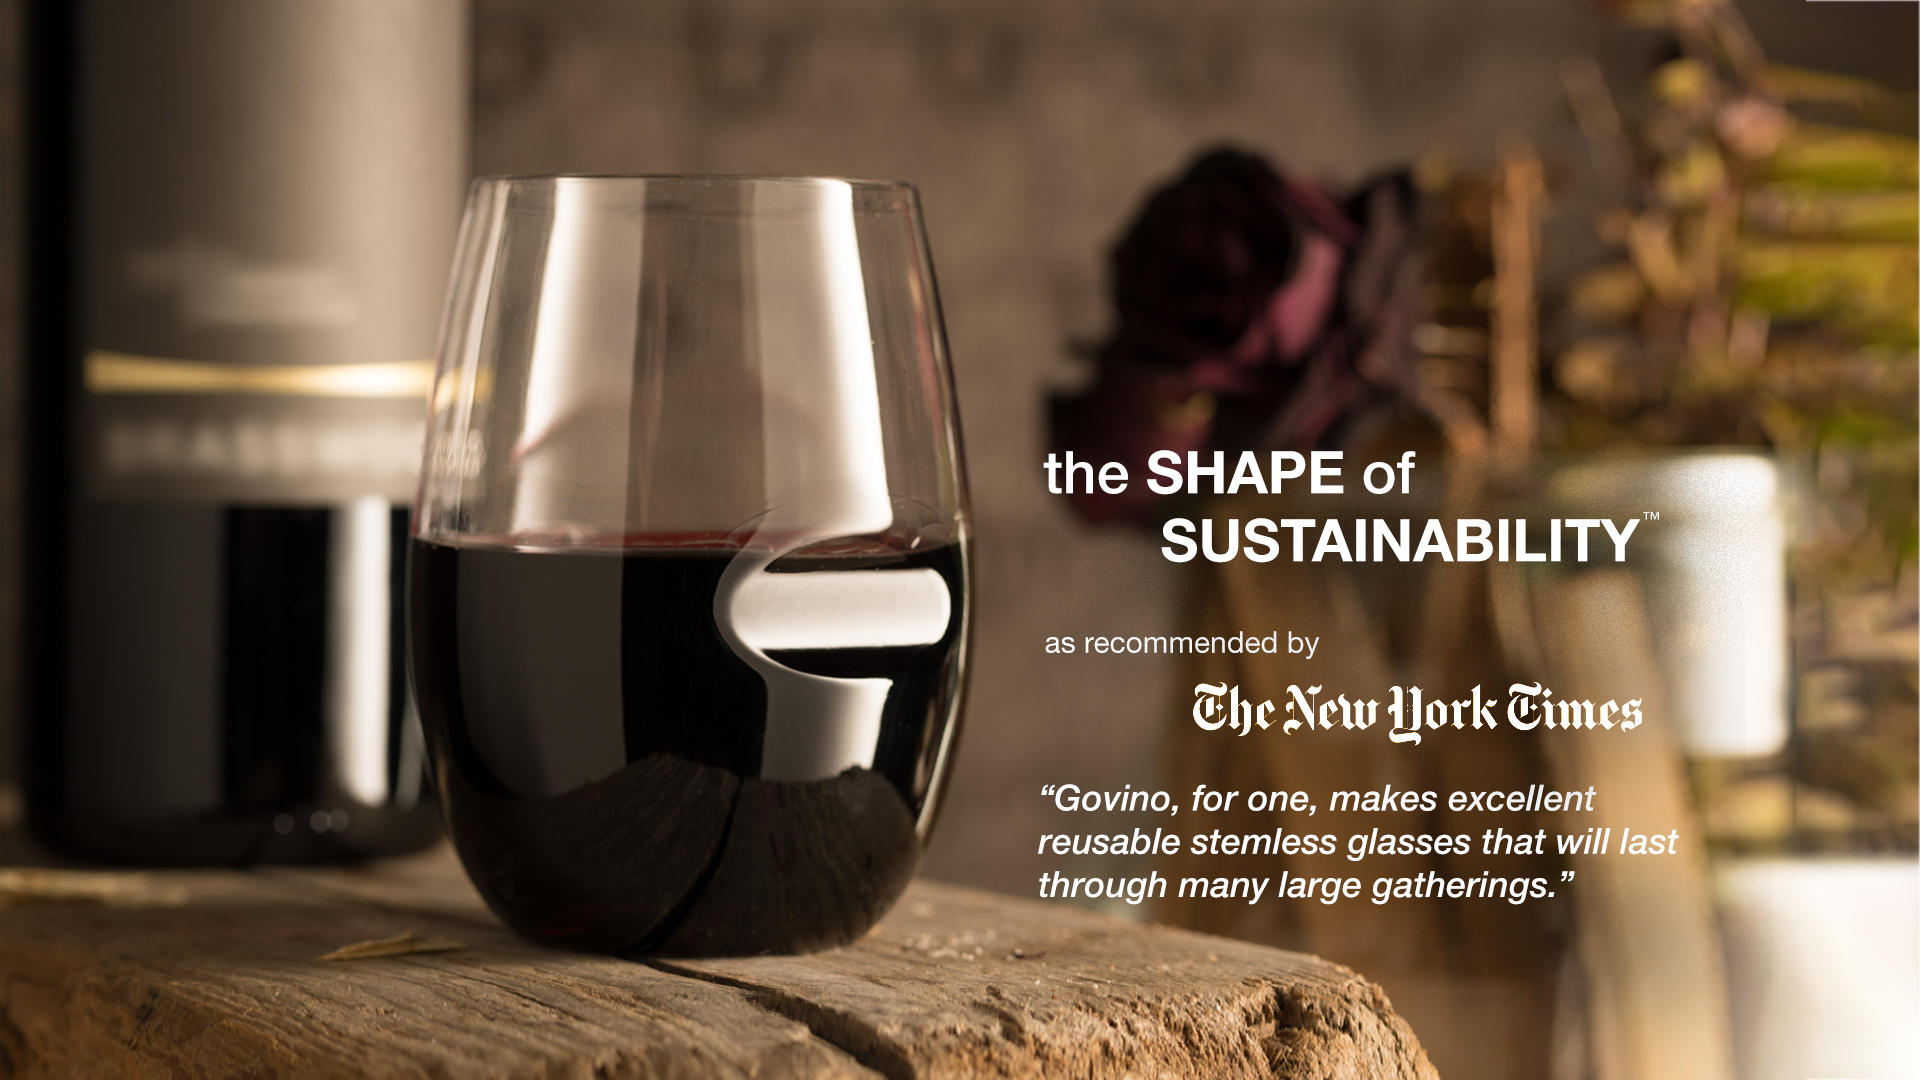 THANKSGIVING FUNNY Shatterproof Wine Glasses